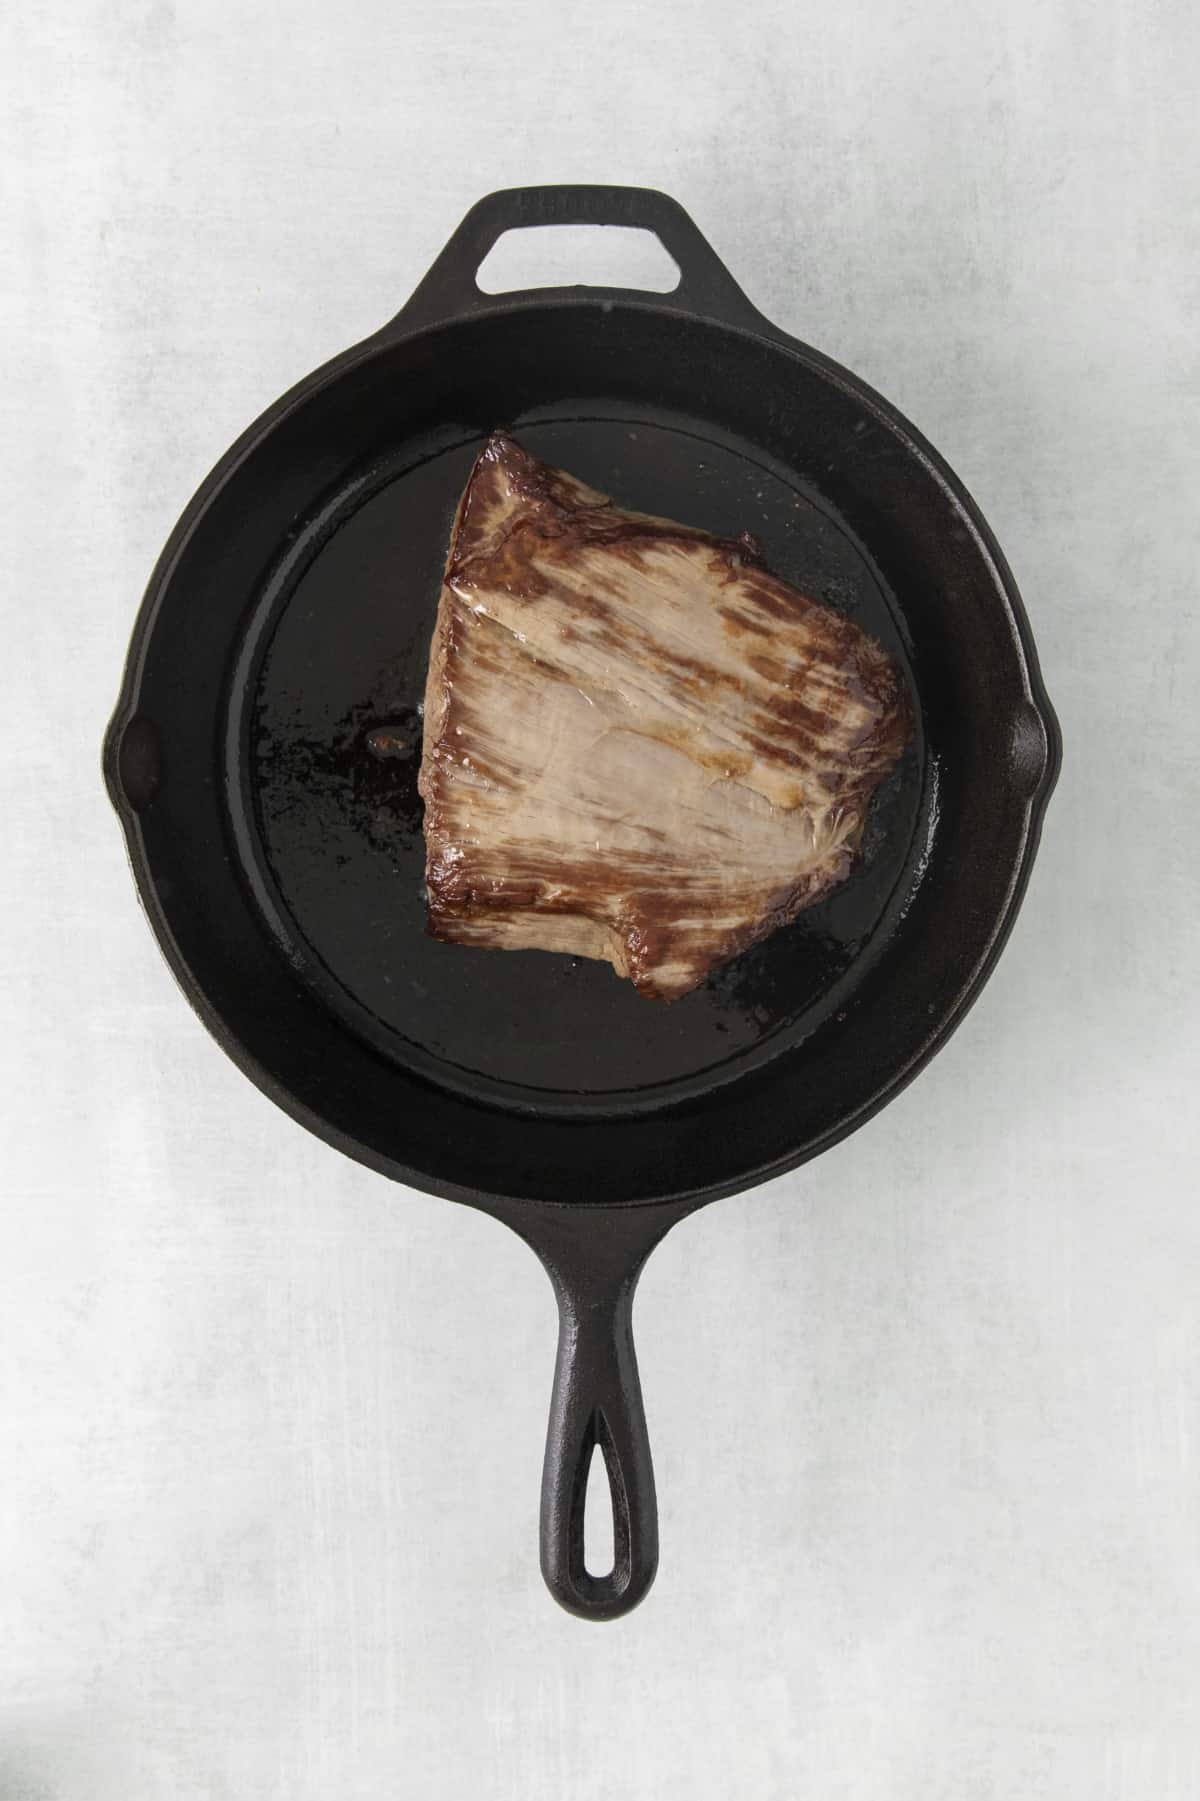 steak in a skillet.